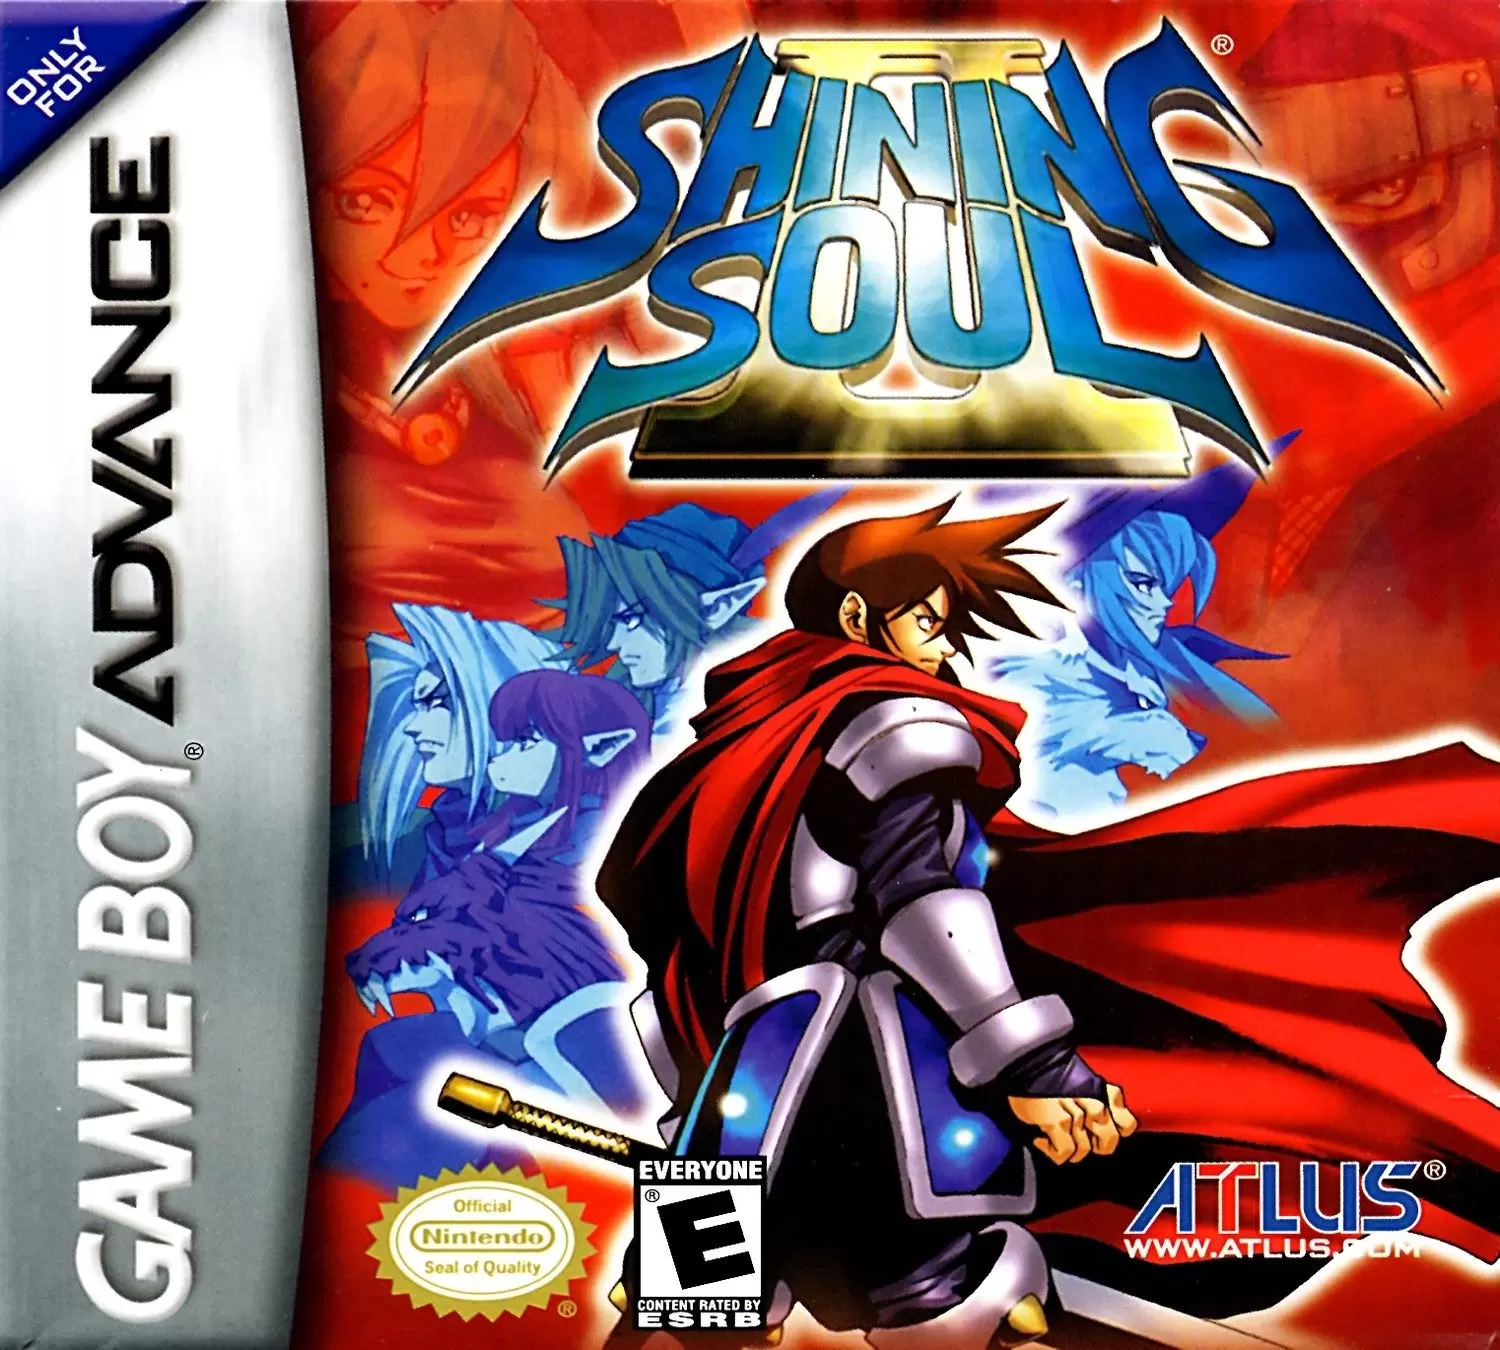 Game Boy Advance Games - Shining Soul II